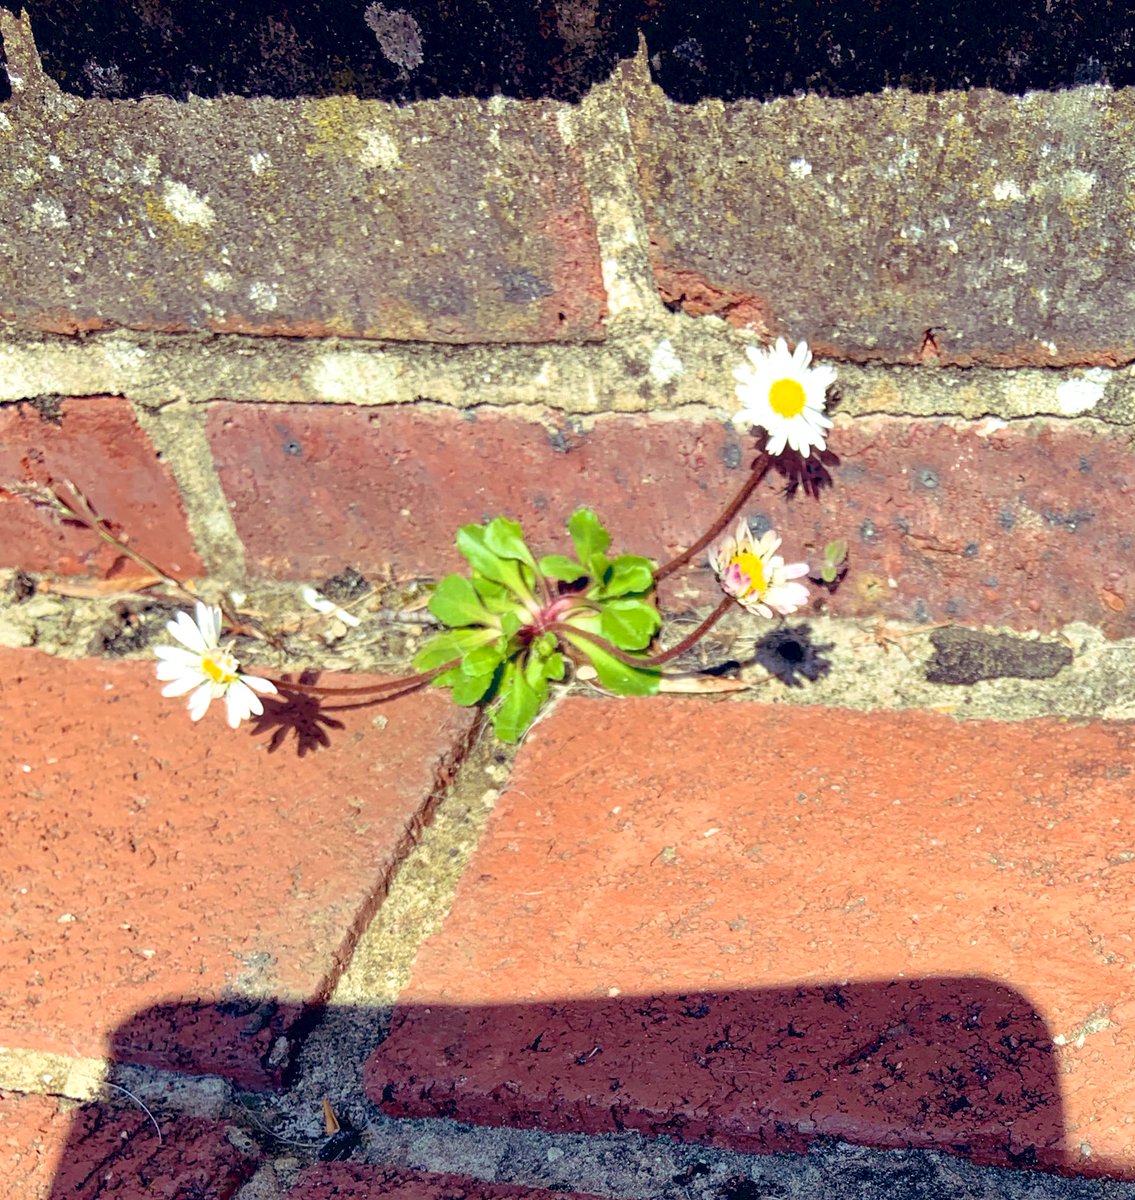 1  2  3...
The Very Happy Daisy
#wildflowers #selfseeders 
🌼.    🌼🌼.    🌼🌼🌼